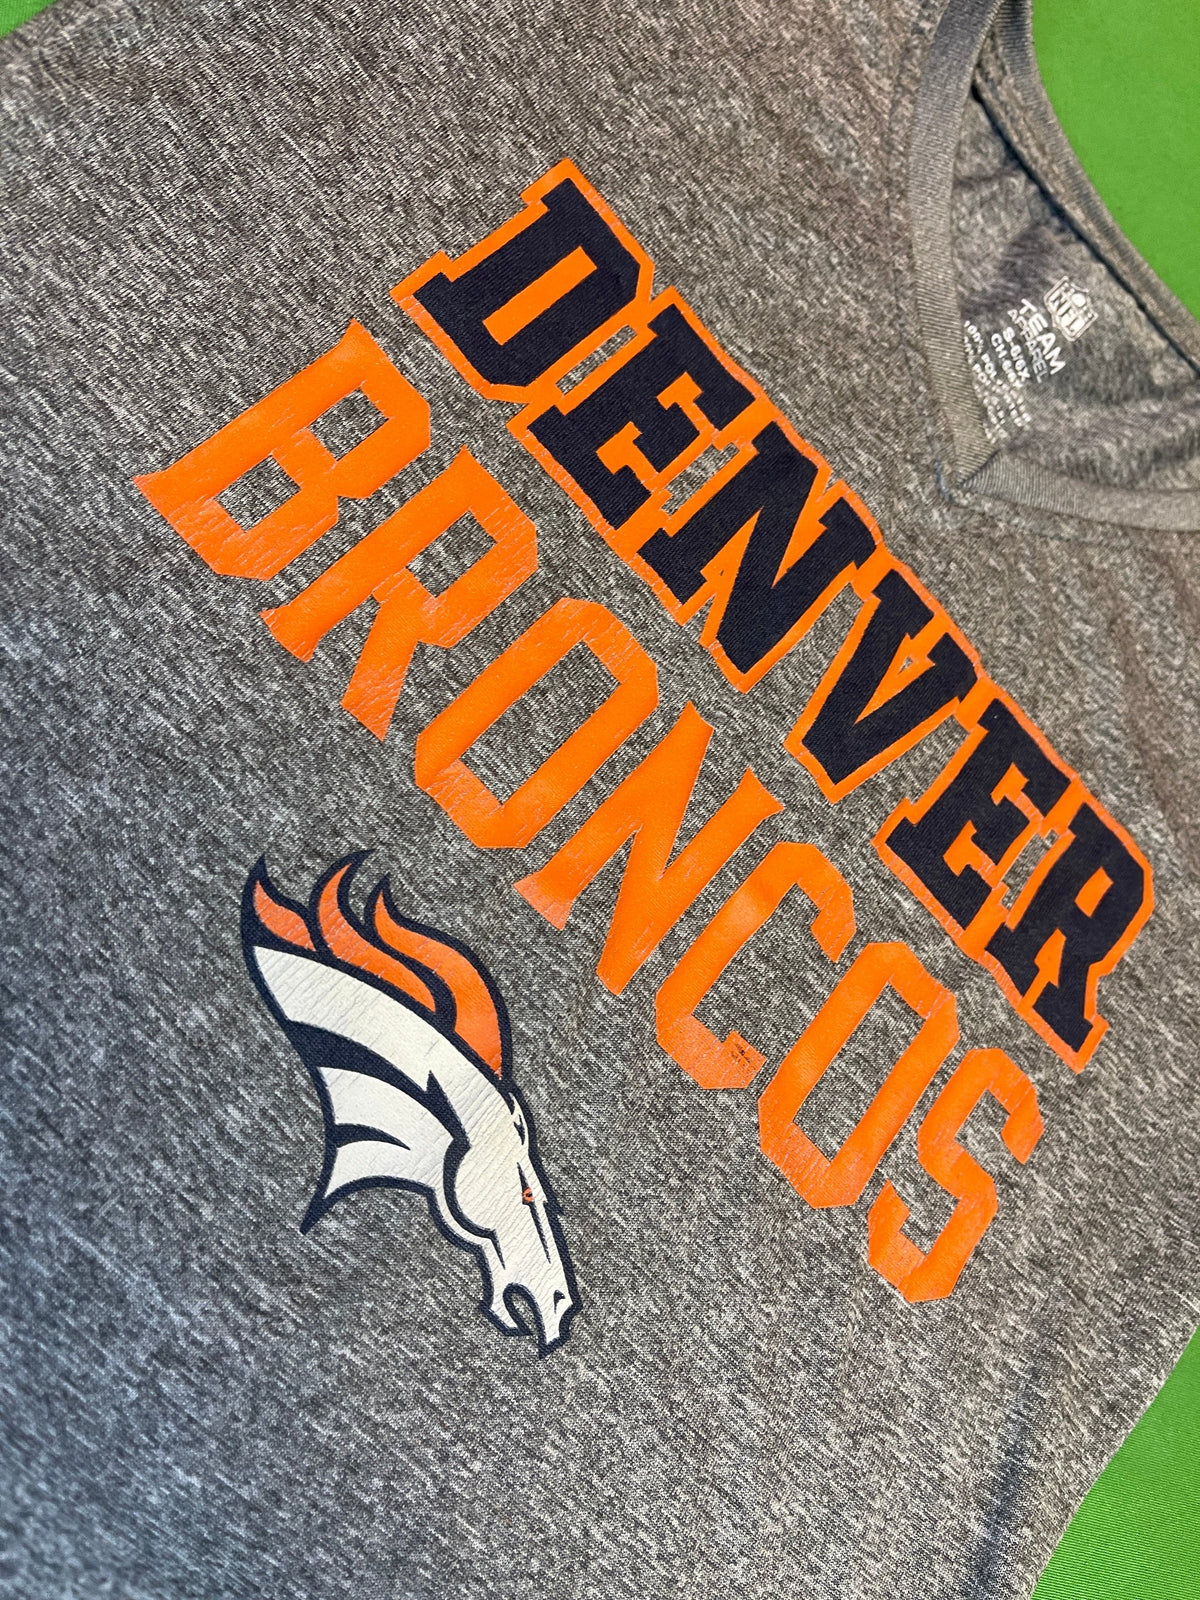 NFL Denver Broncos Heathered Grey Girls' T-Shirt Youth Small